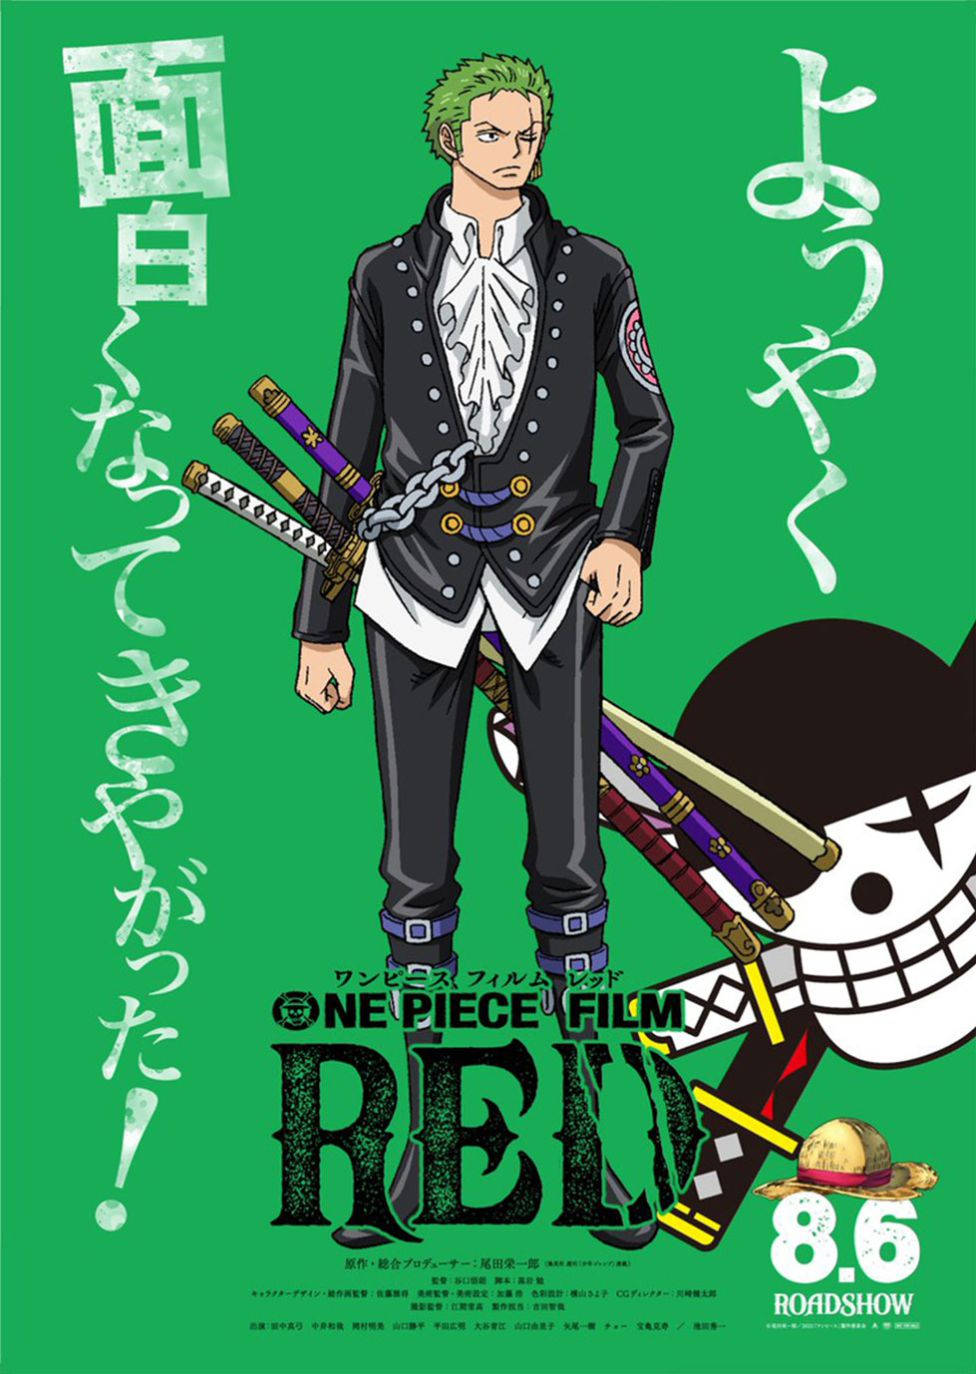 One Piece Film Red Zoro Poster Wallpaper